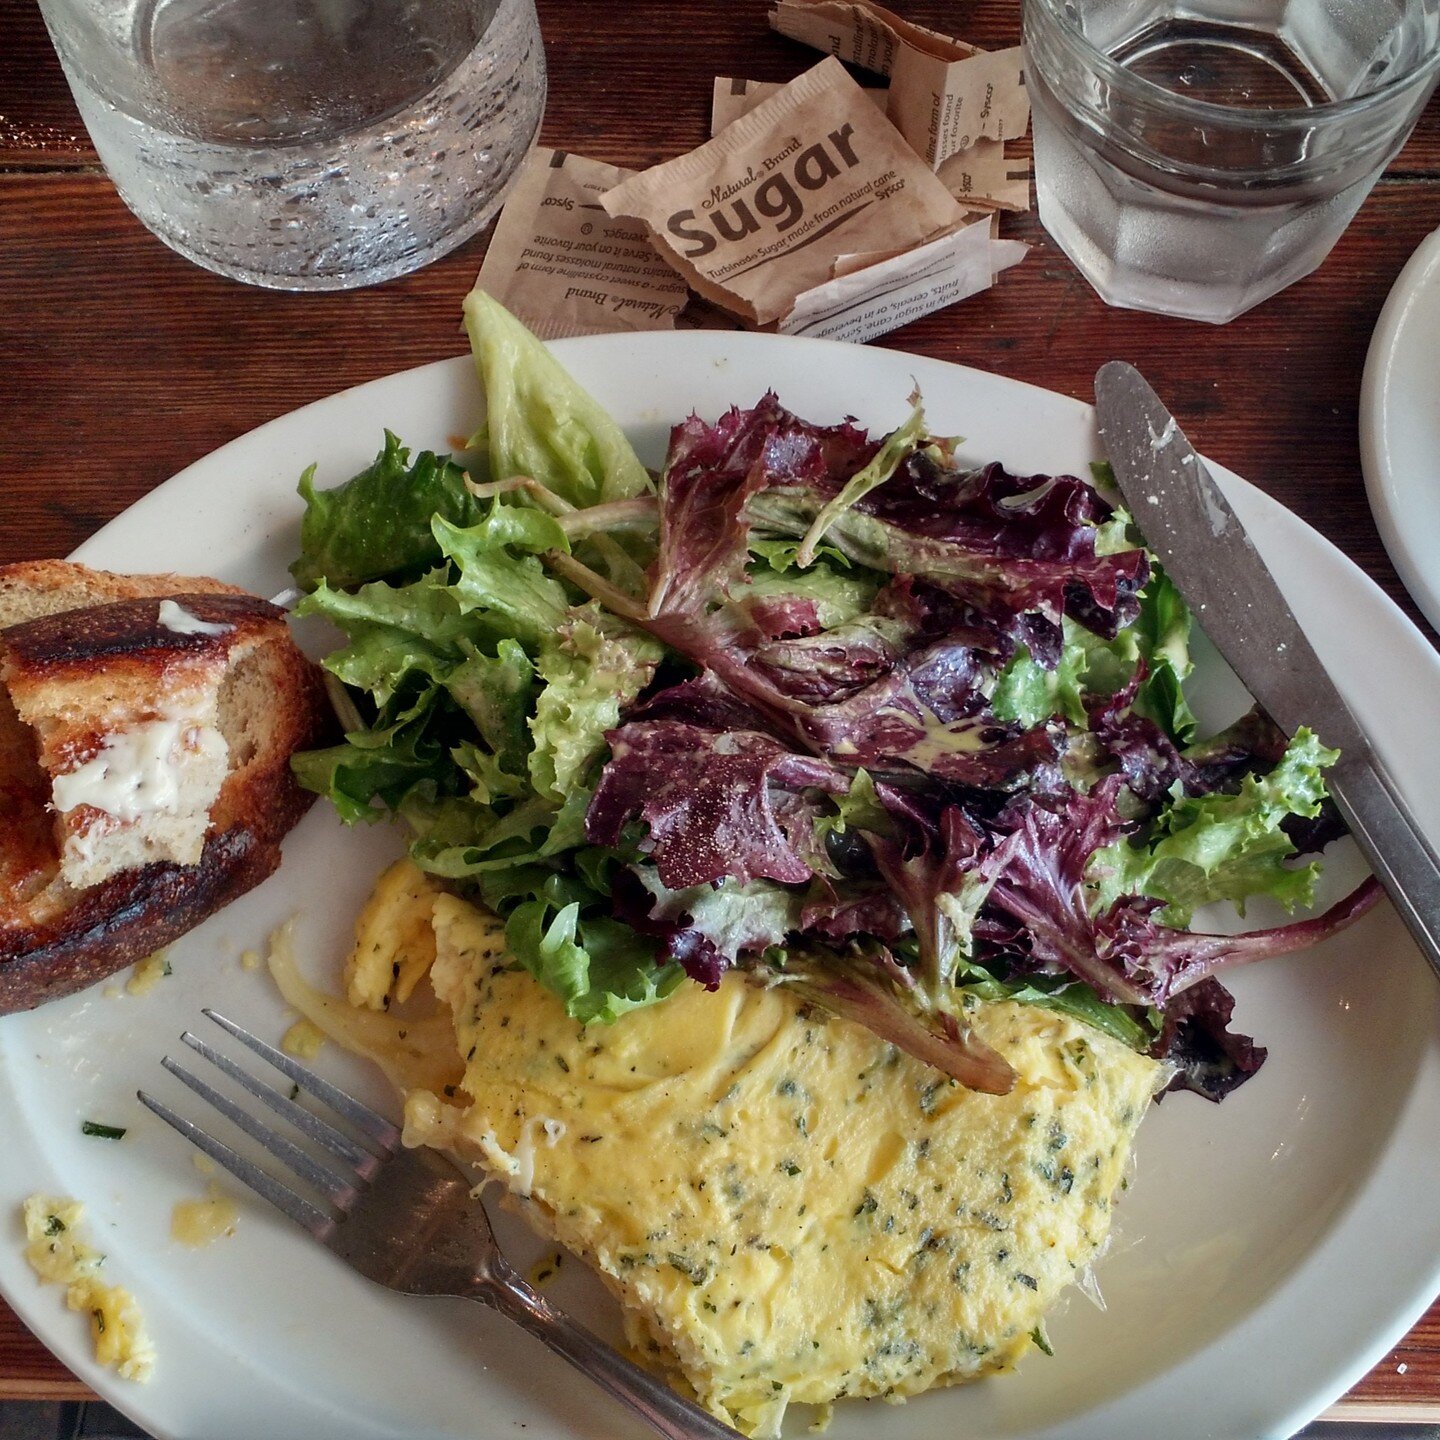 Breakfast in New Orleans at Toast on Gentilly Boulevard.

#neworleans #breakfast #eggs #salad